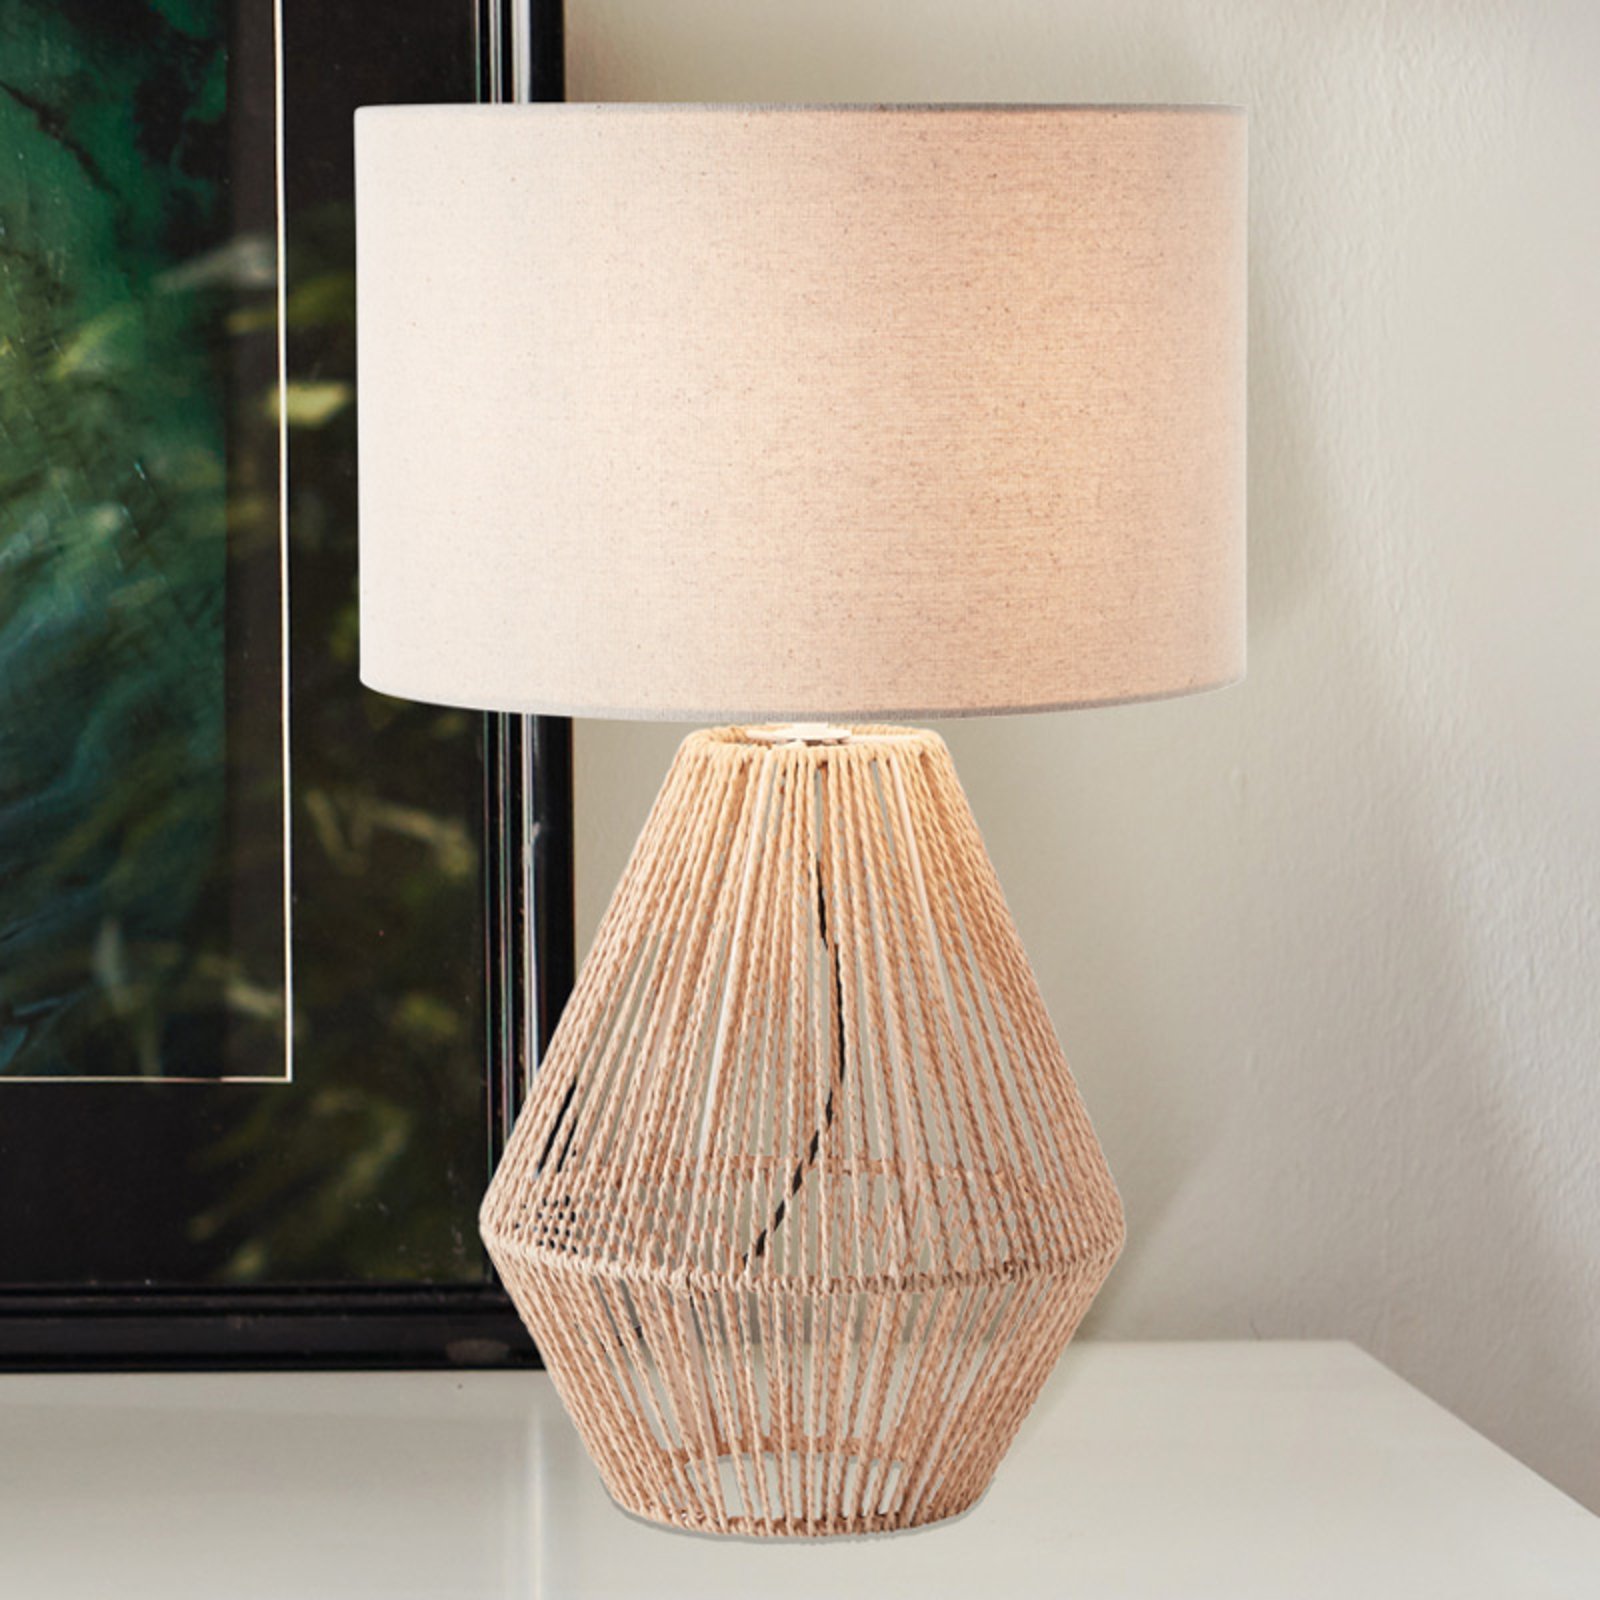 Laraine table lamp, fabric lampshade